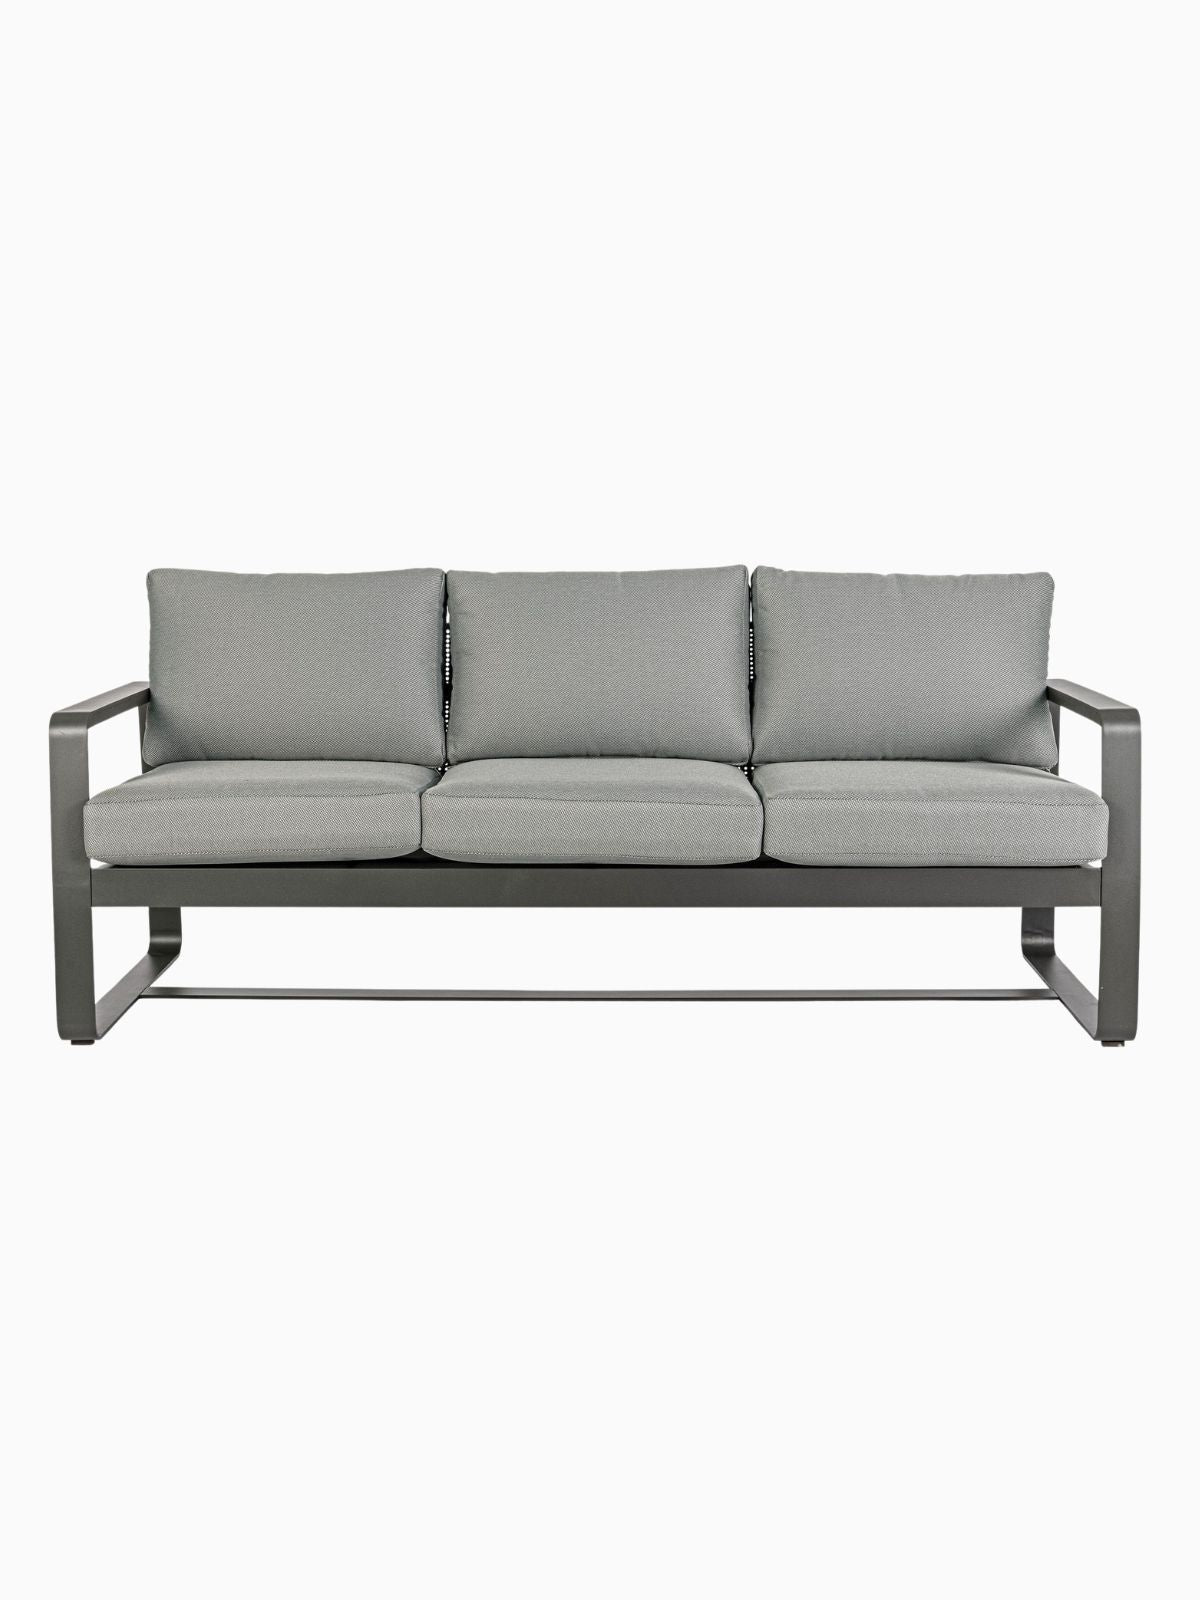 Divano da esterno 3 sedute Merrigan in alluminio, colore grigio-2